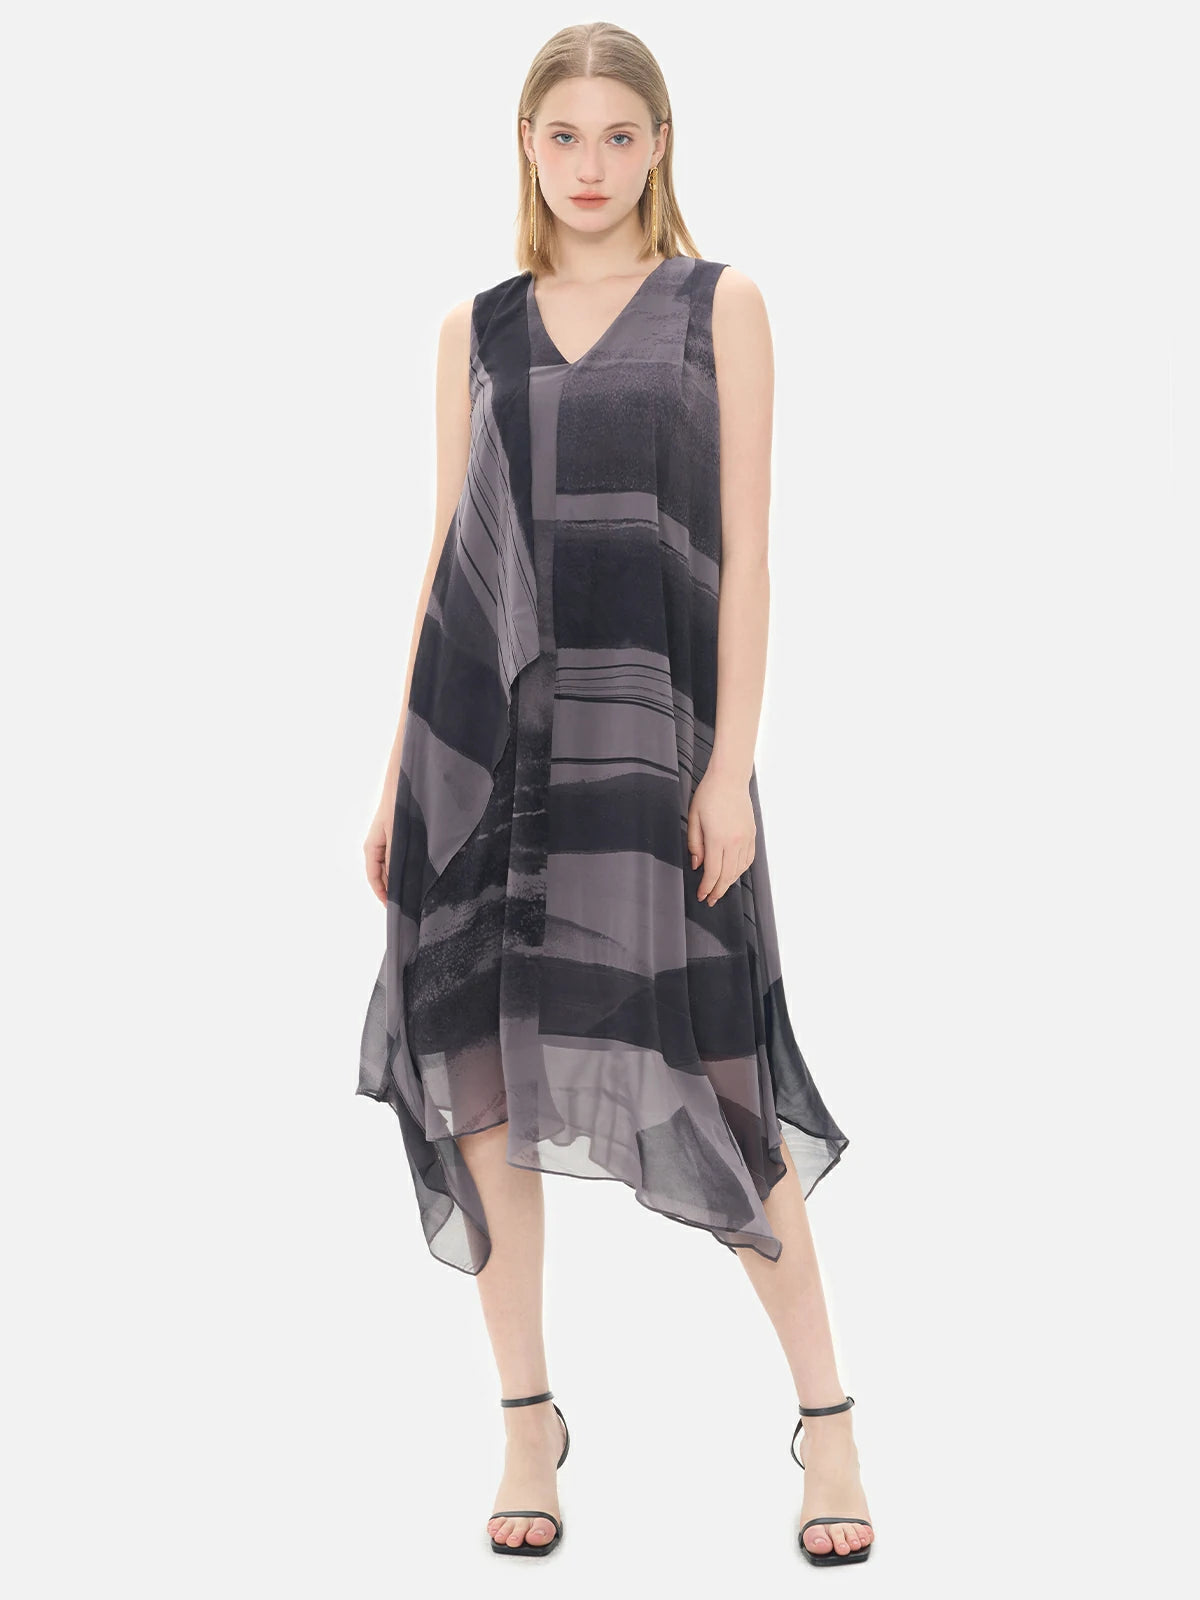 Embrace elegance with this sleeveless chiffon dress, featuring an irregular print and a lightweight material.